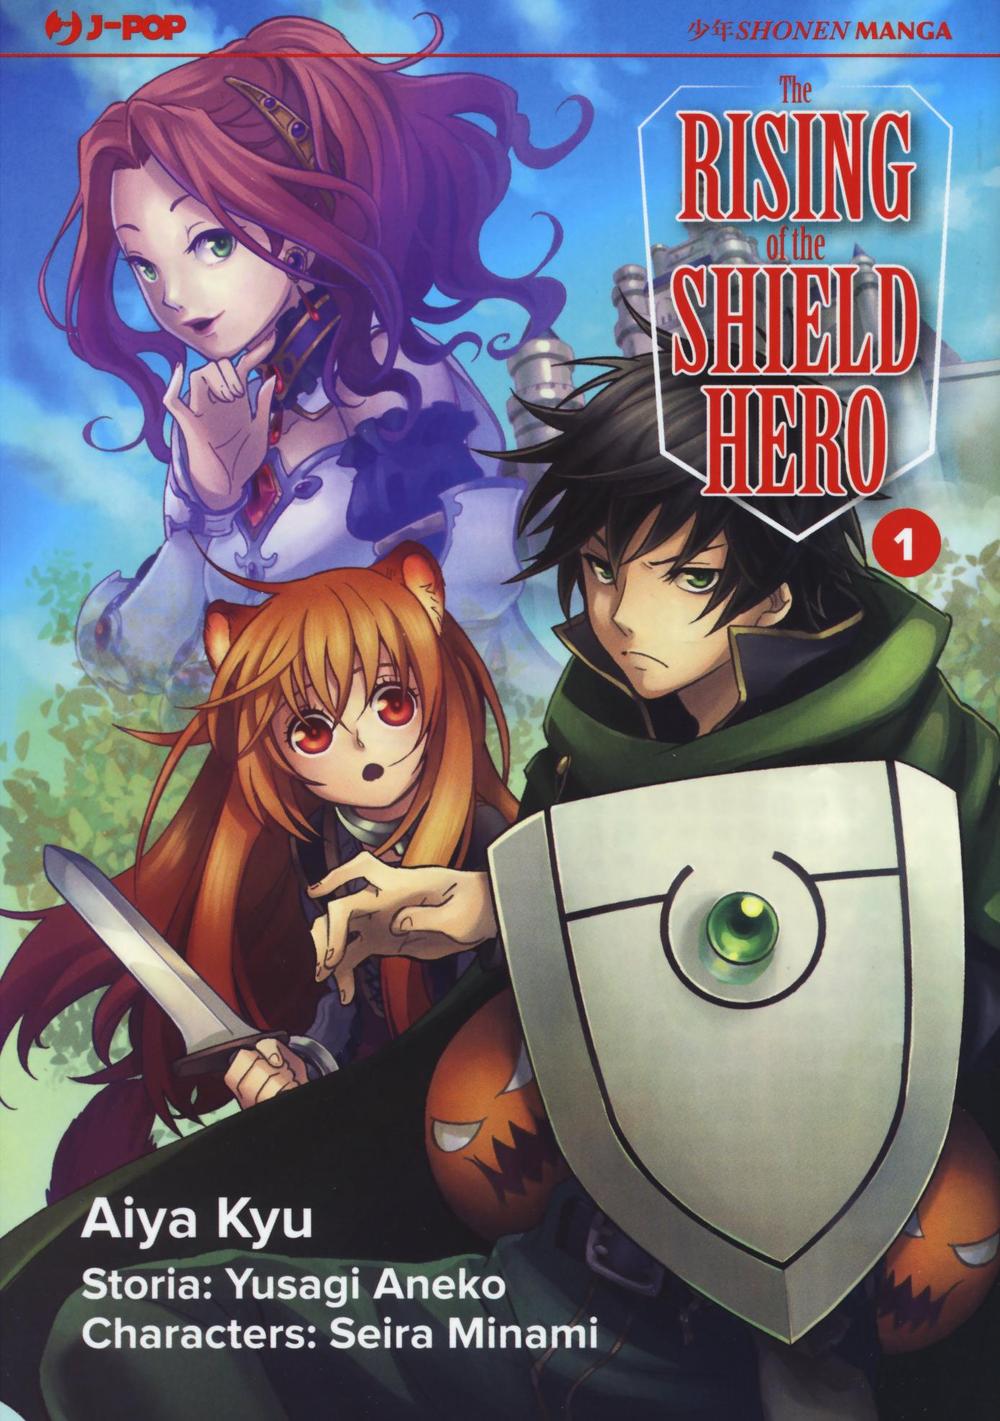 Book rising of the shield hero Aneko Yusagi